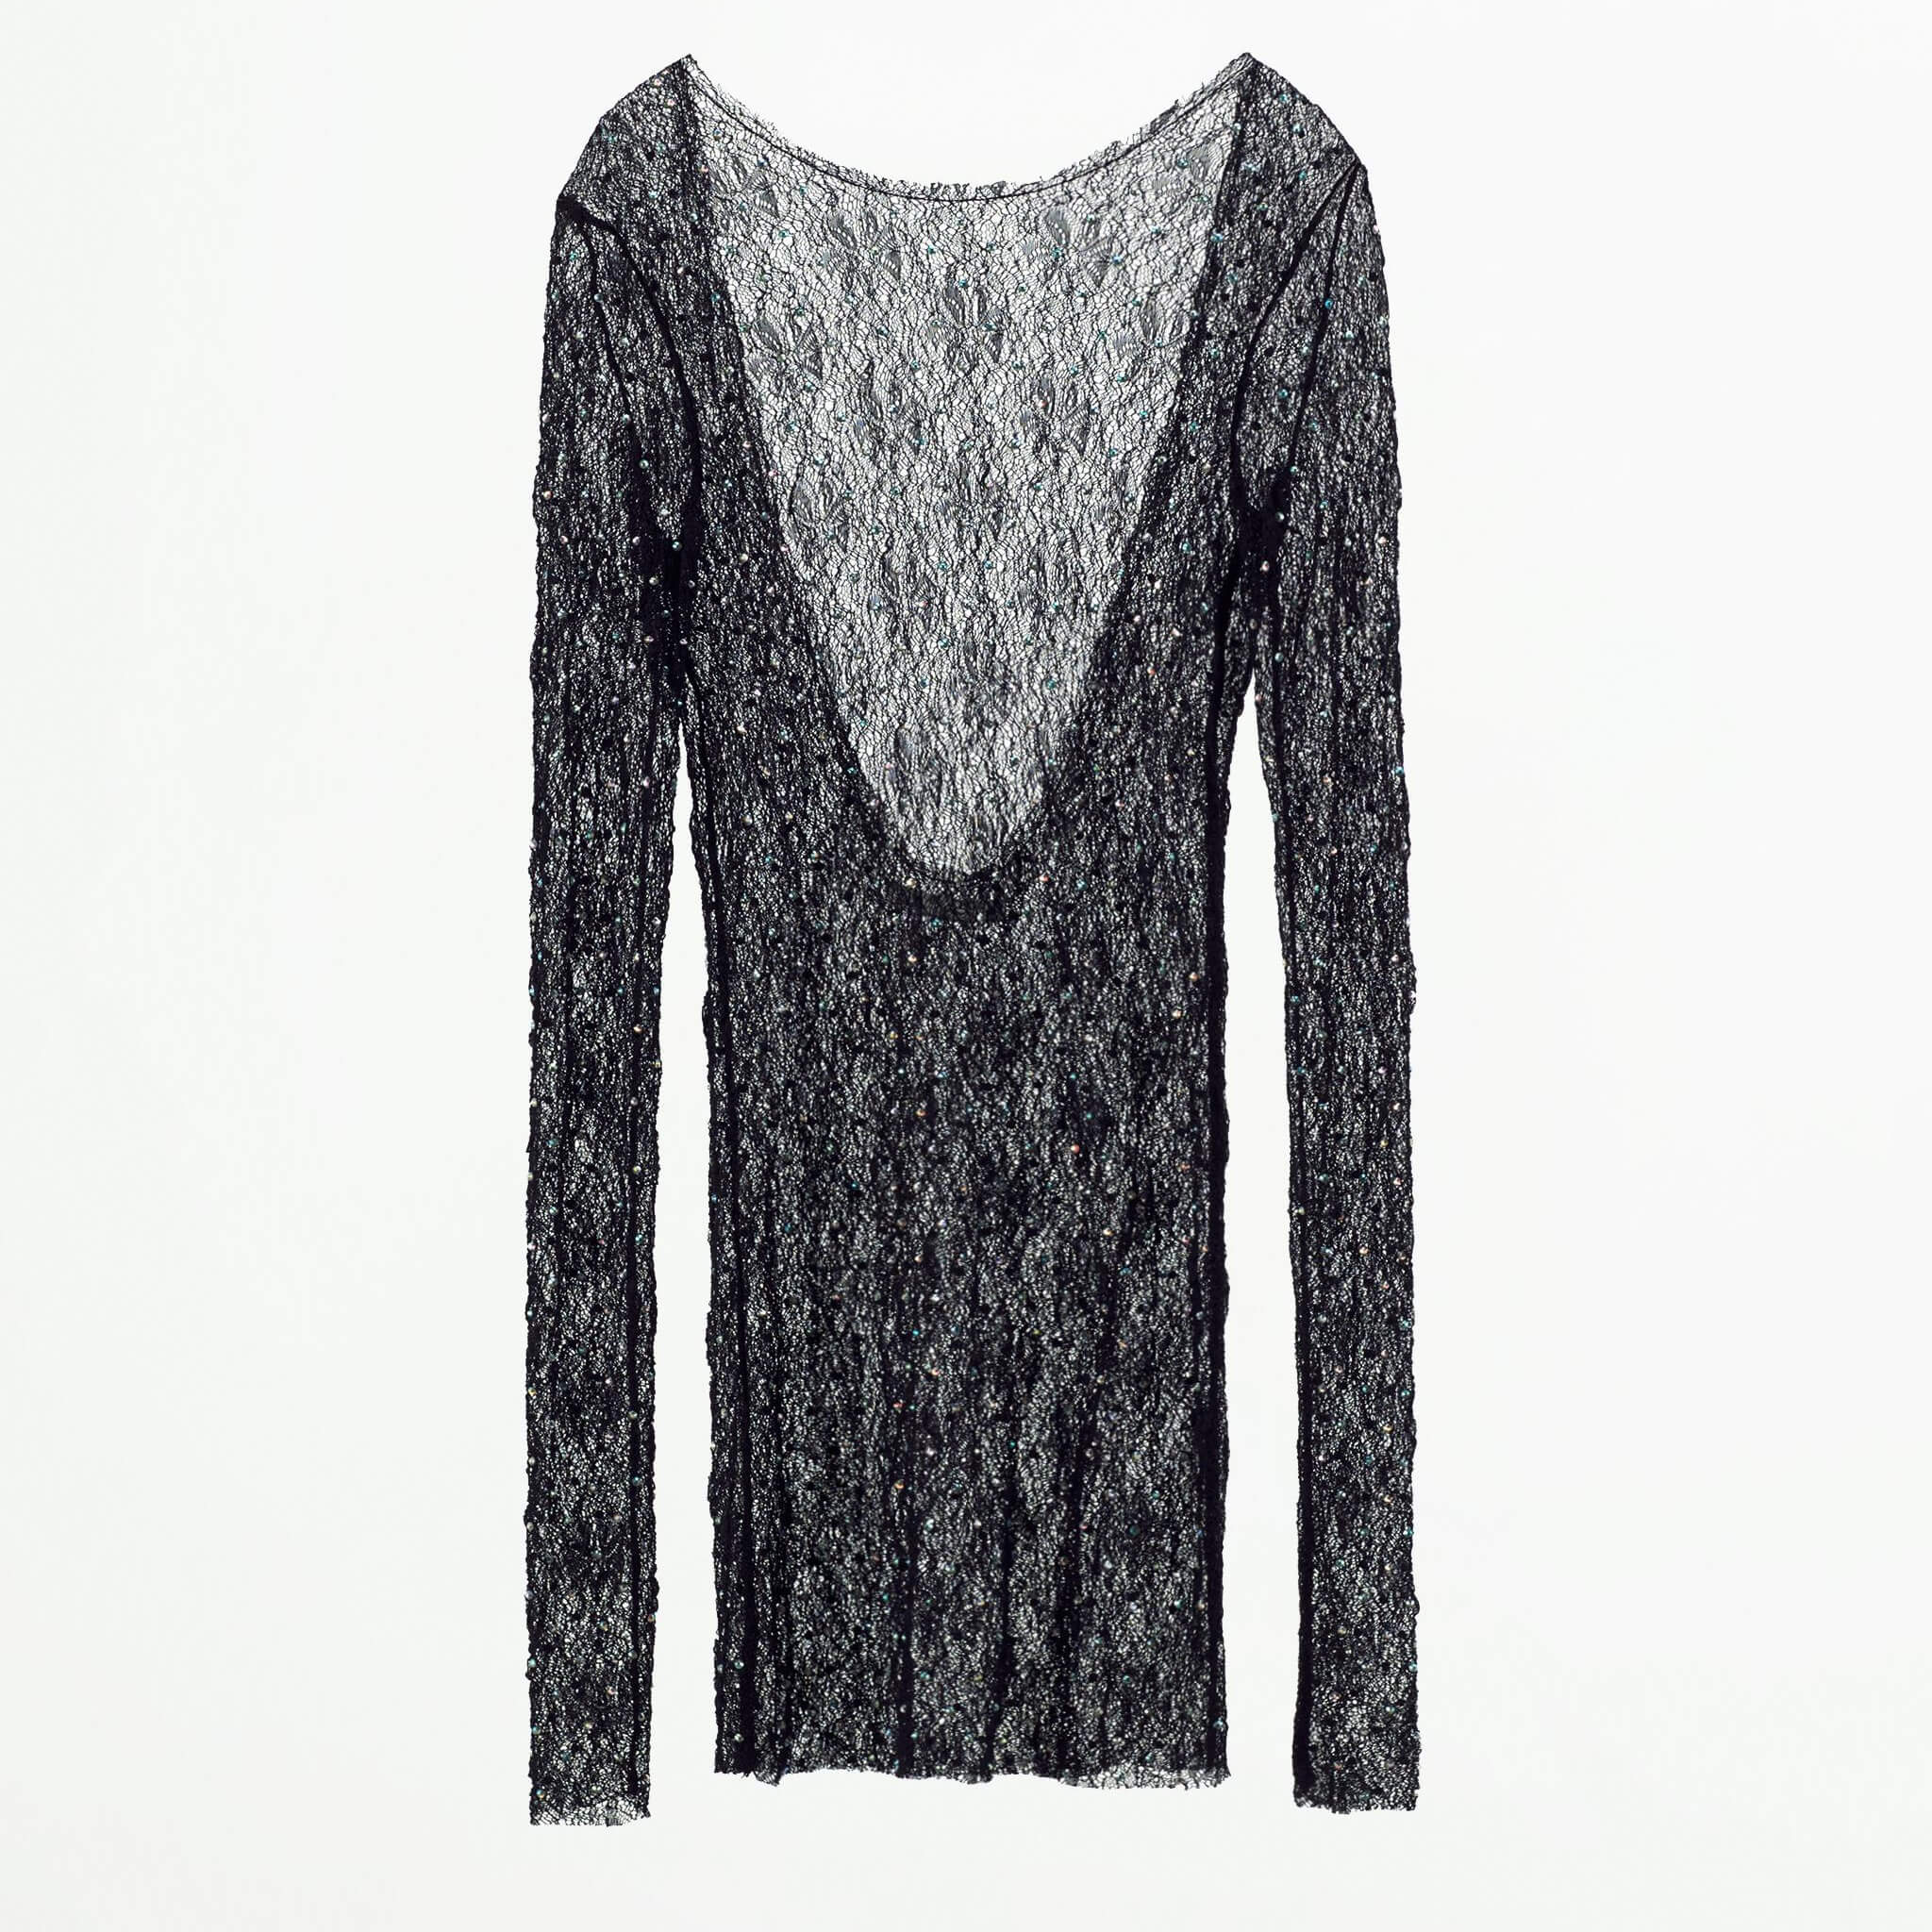 Топ Zara Lace With Rhinestones, черный блейзер zara lace with padded shoulders черный